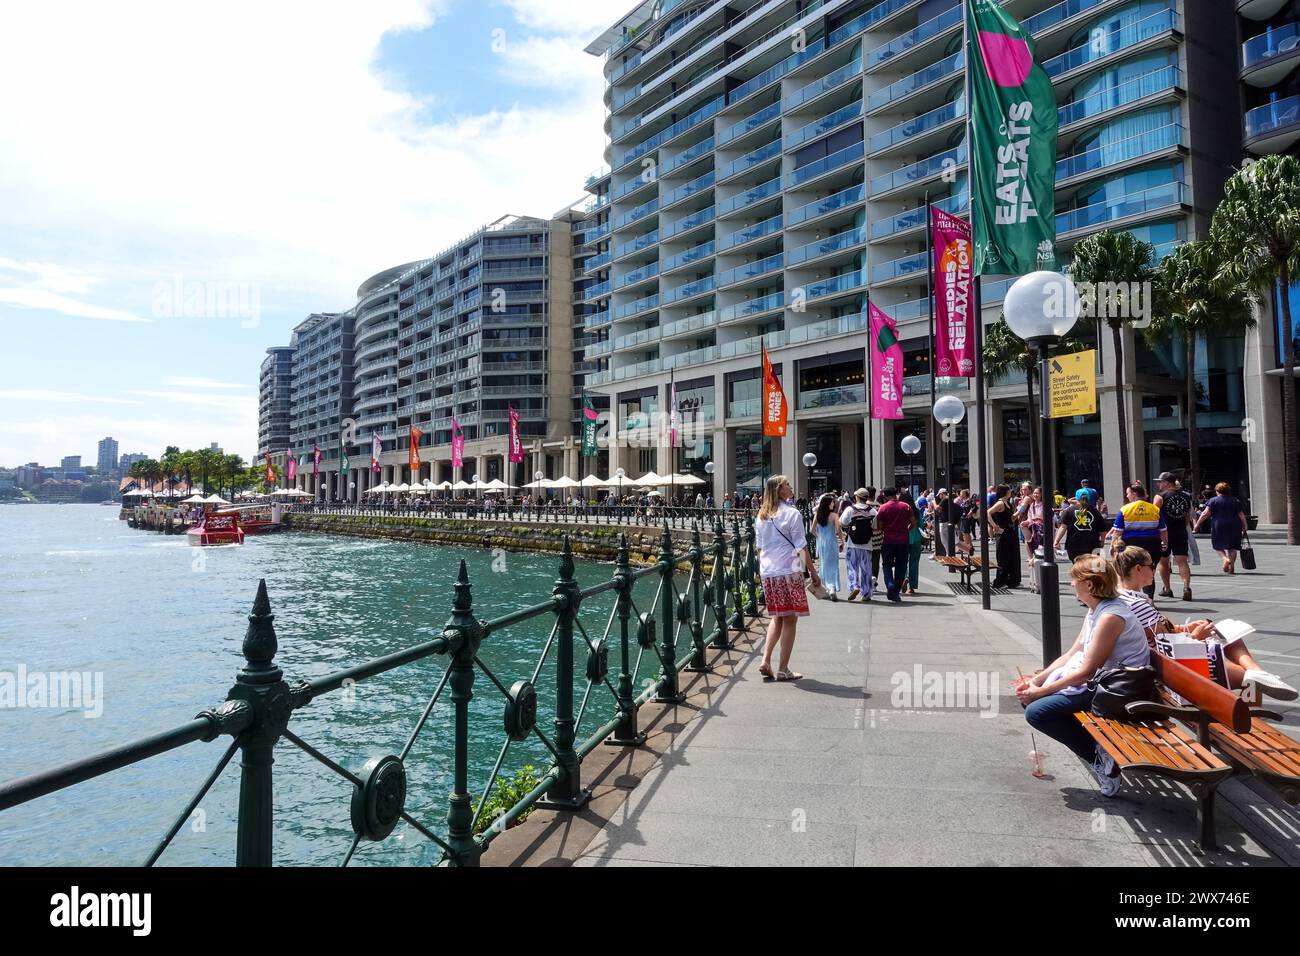 People walking around Circular Quay, Sydney, Australia on a sunny day Stock Photo